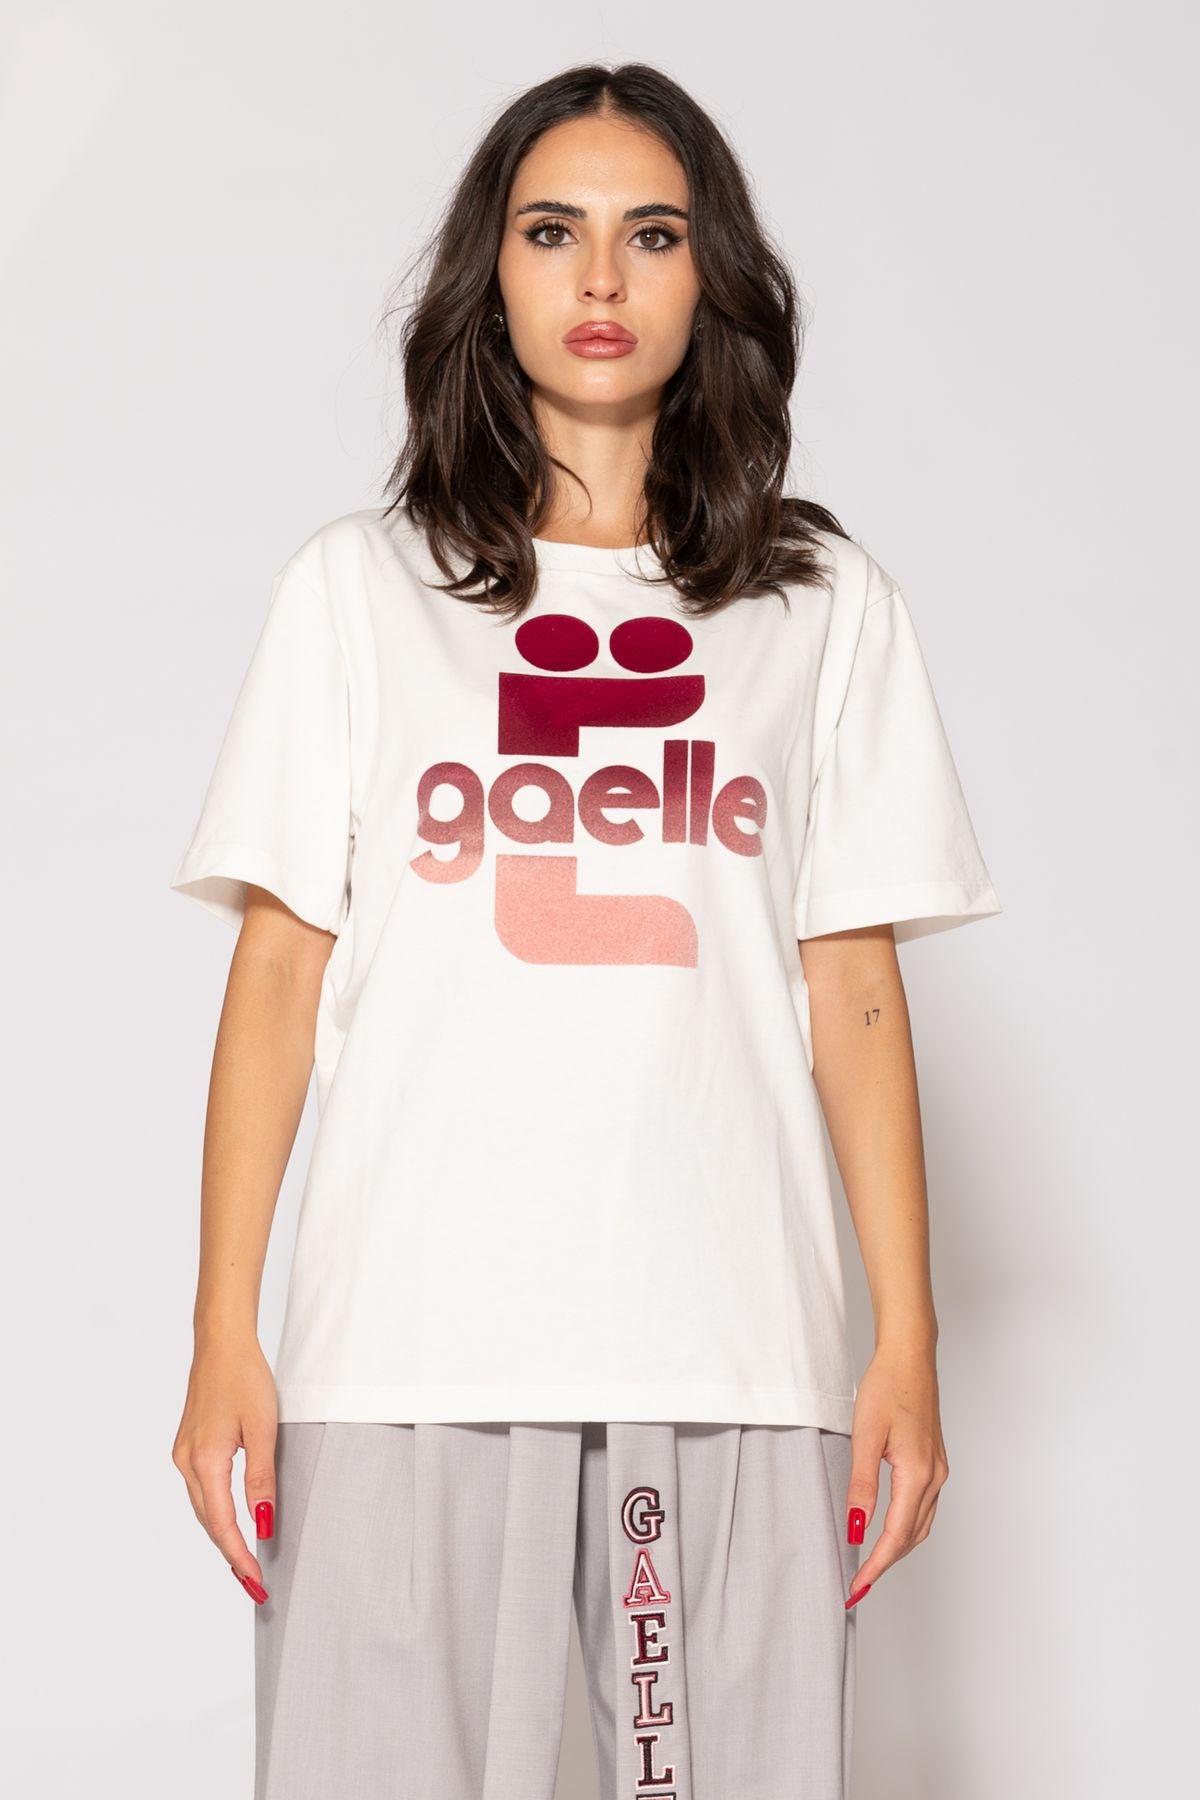 gbdp18988 - t-shirt - GAELLE PARIS